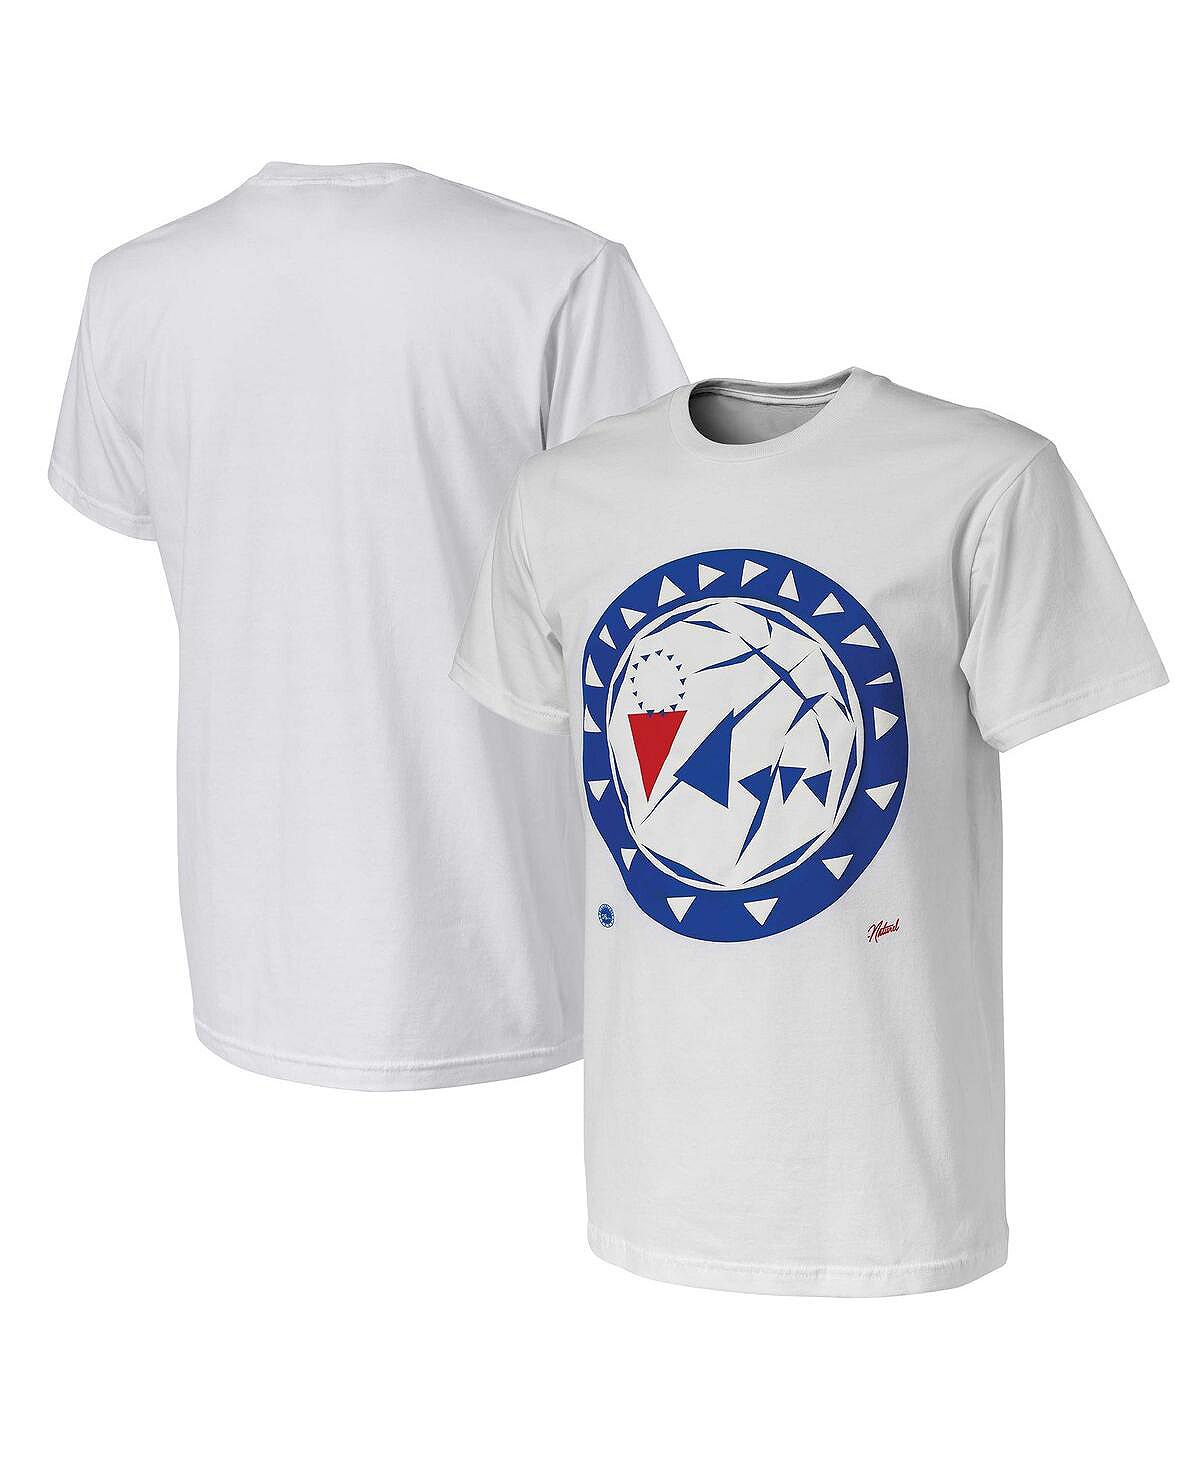 Мужская футболка nba x naturel white philadelphia 76ers no caller id NBA Exclusive Collection, белый